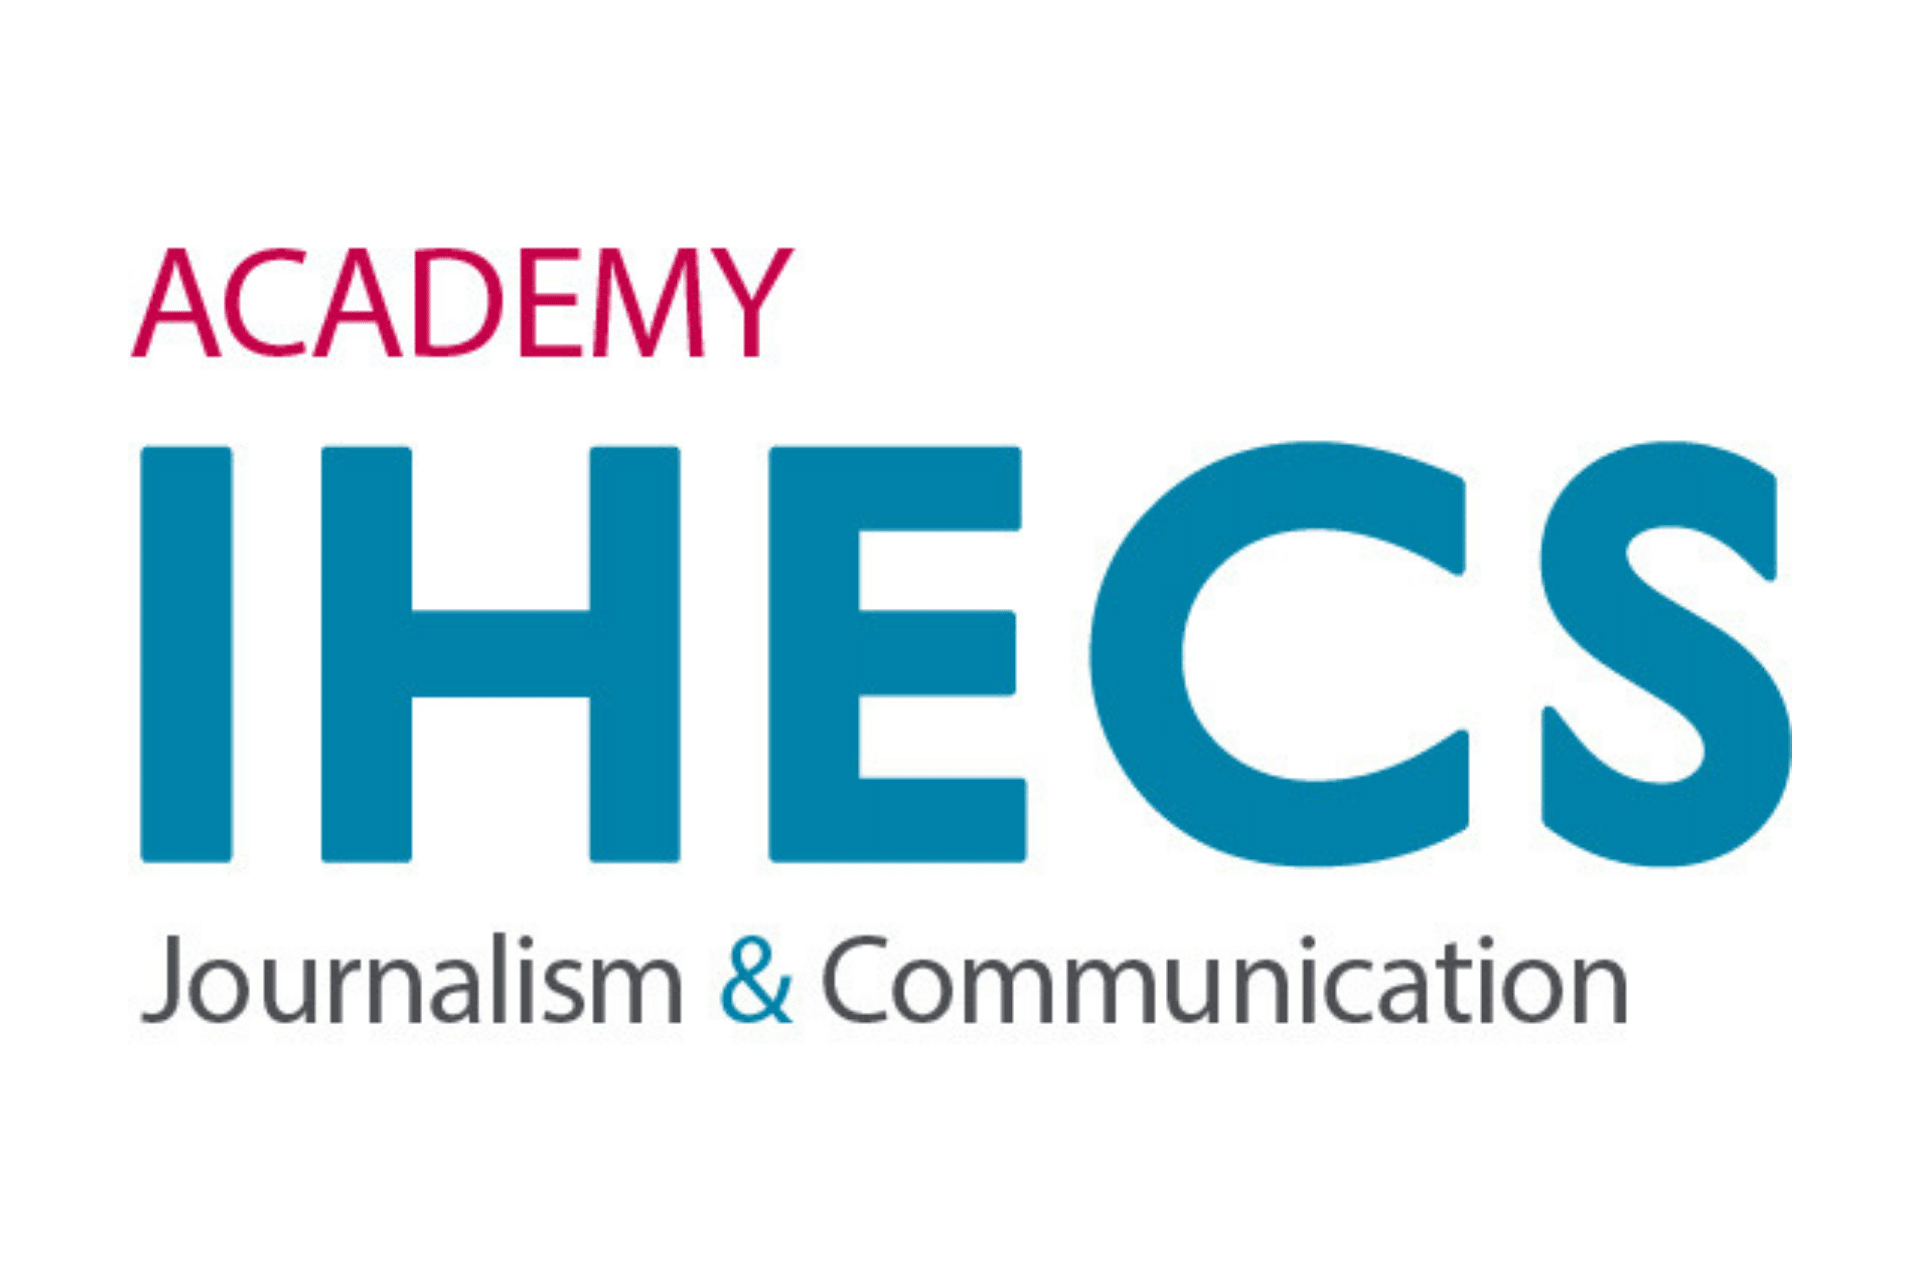 Ihecs Academy